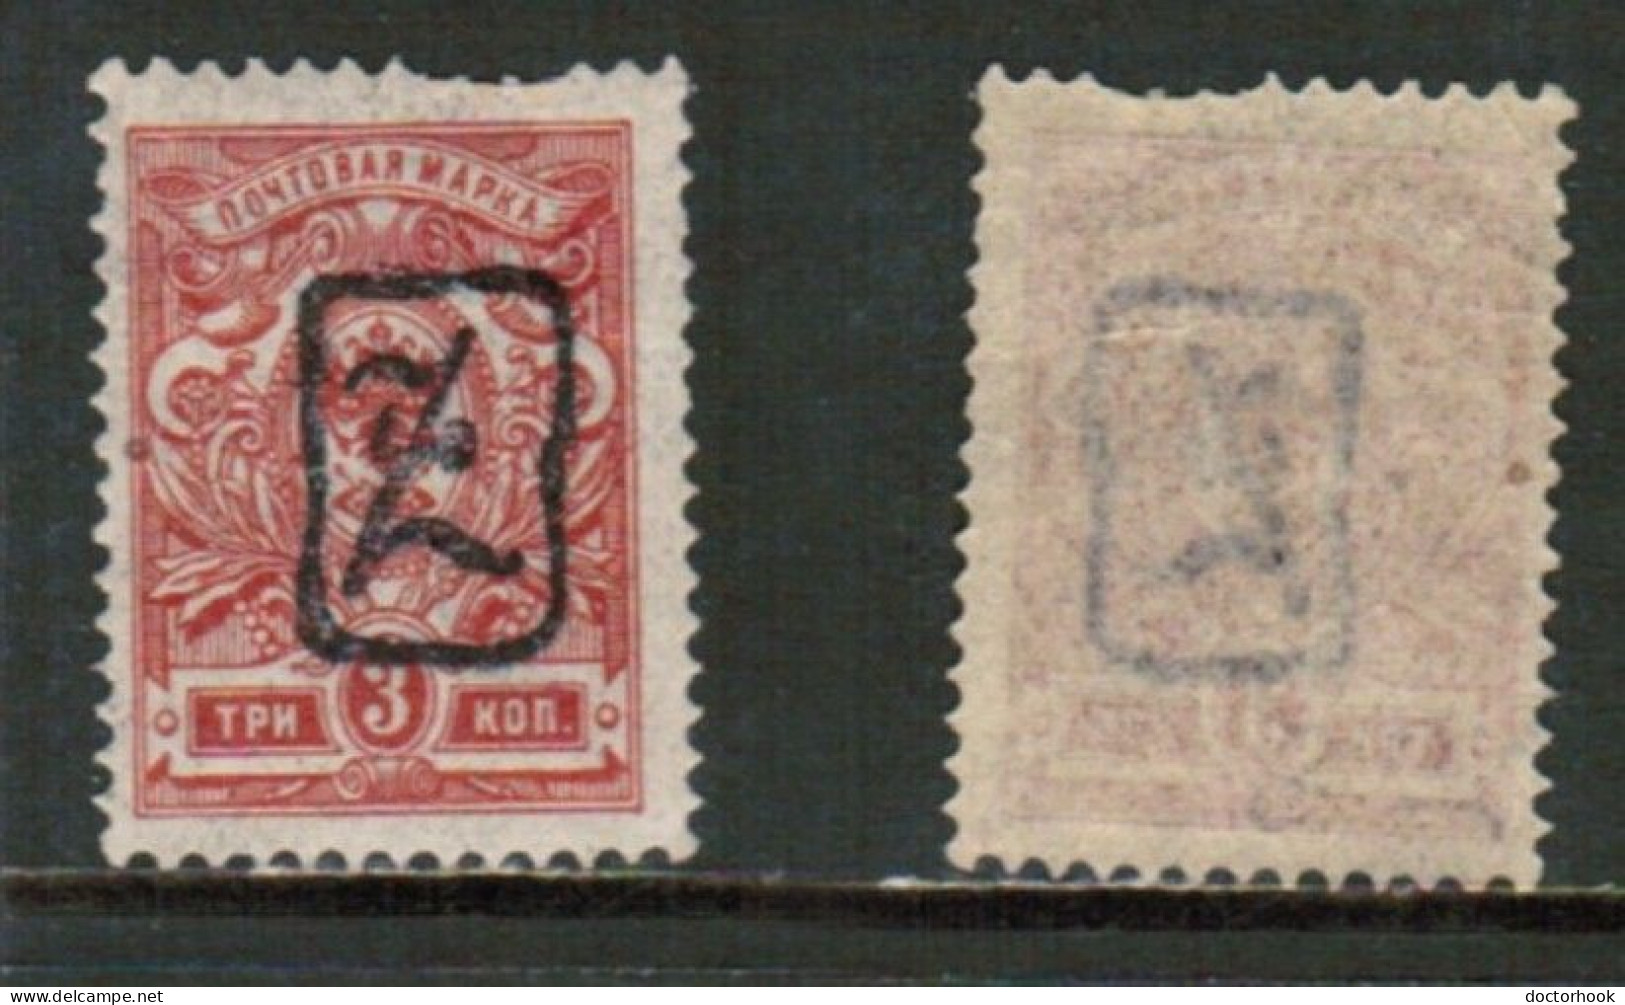 ARMANIA   Scott # 32a** MINT NH (CONDITION AS PER SCAN) (Stamp Scan # 920-7) - Armenia